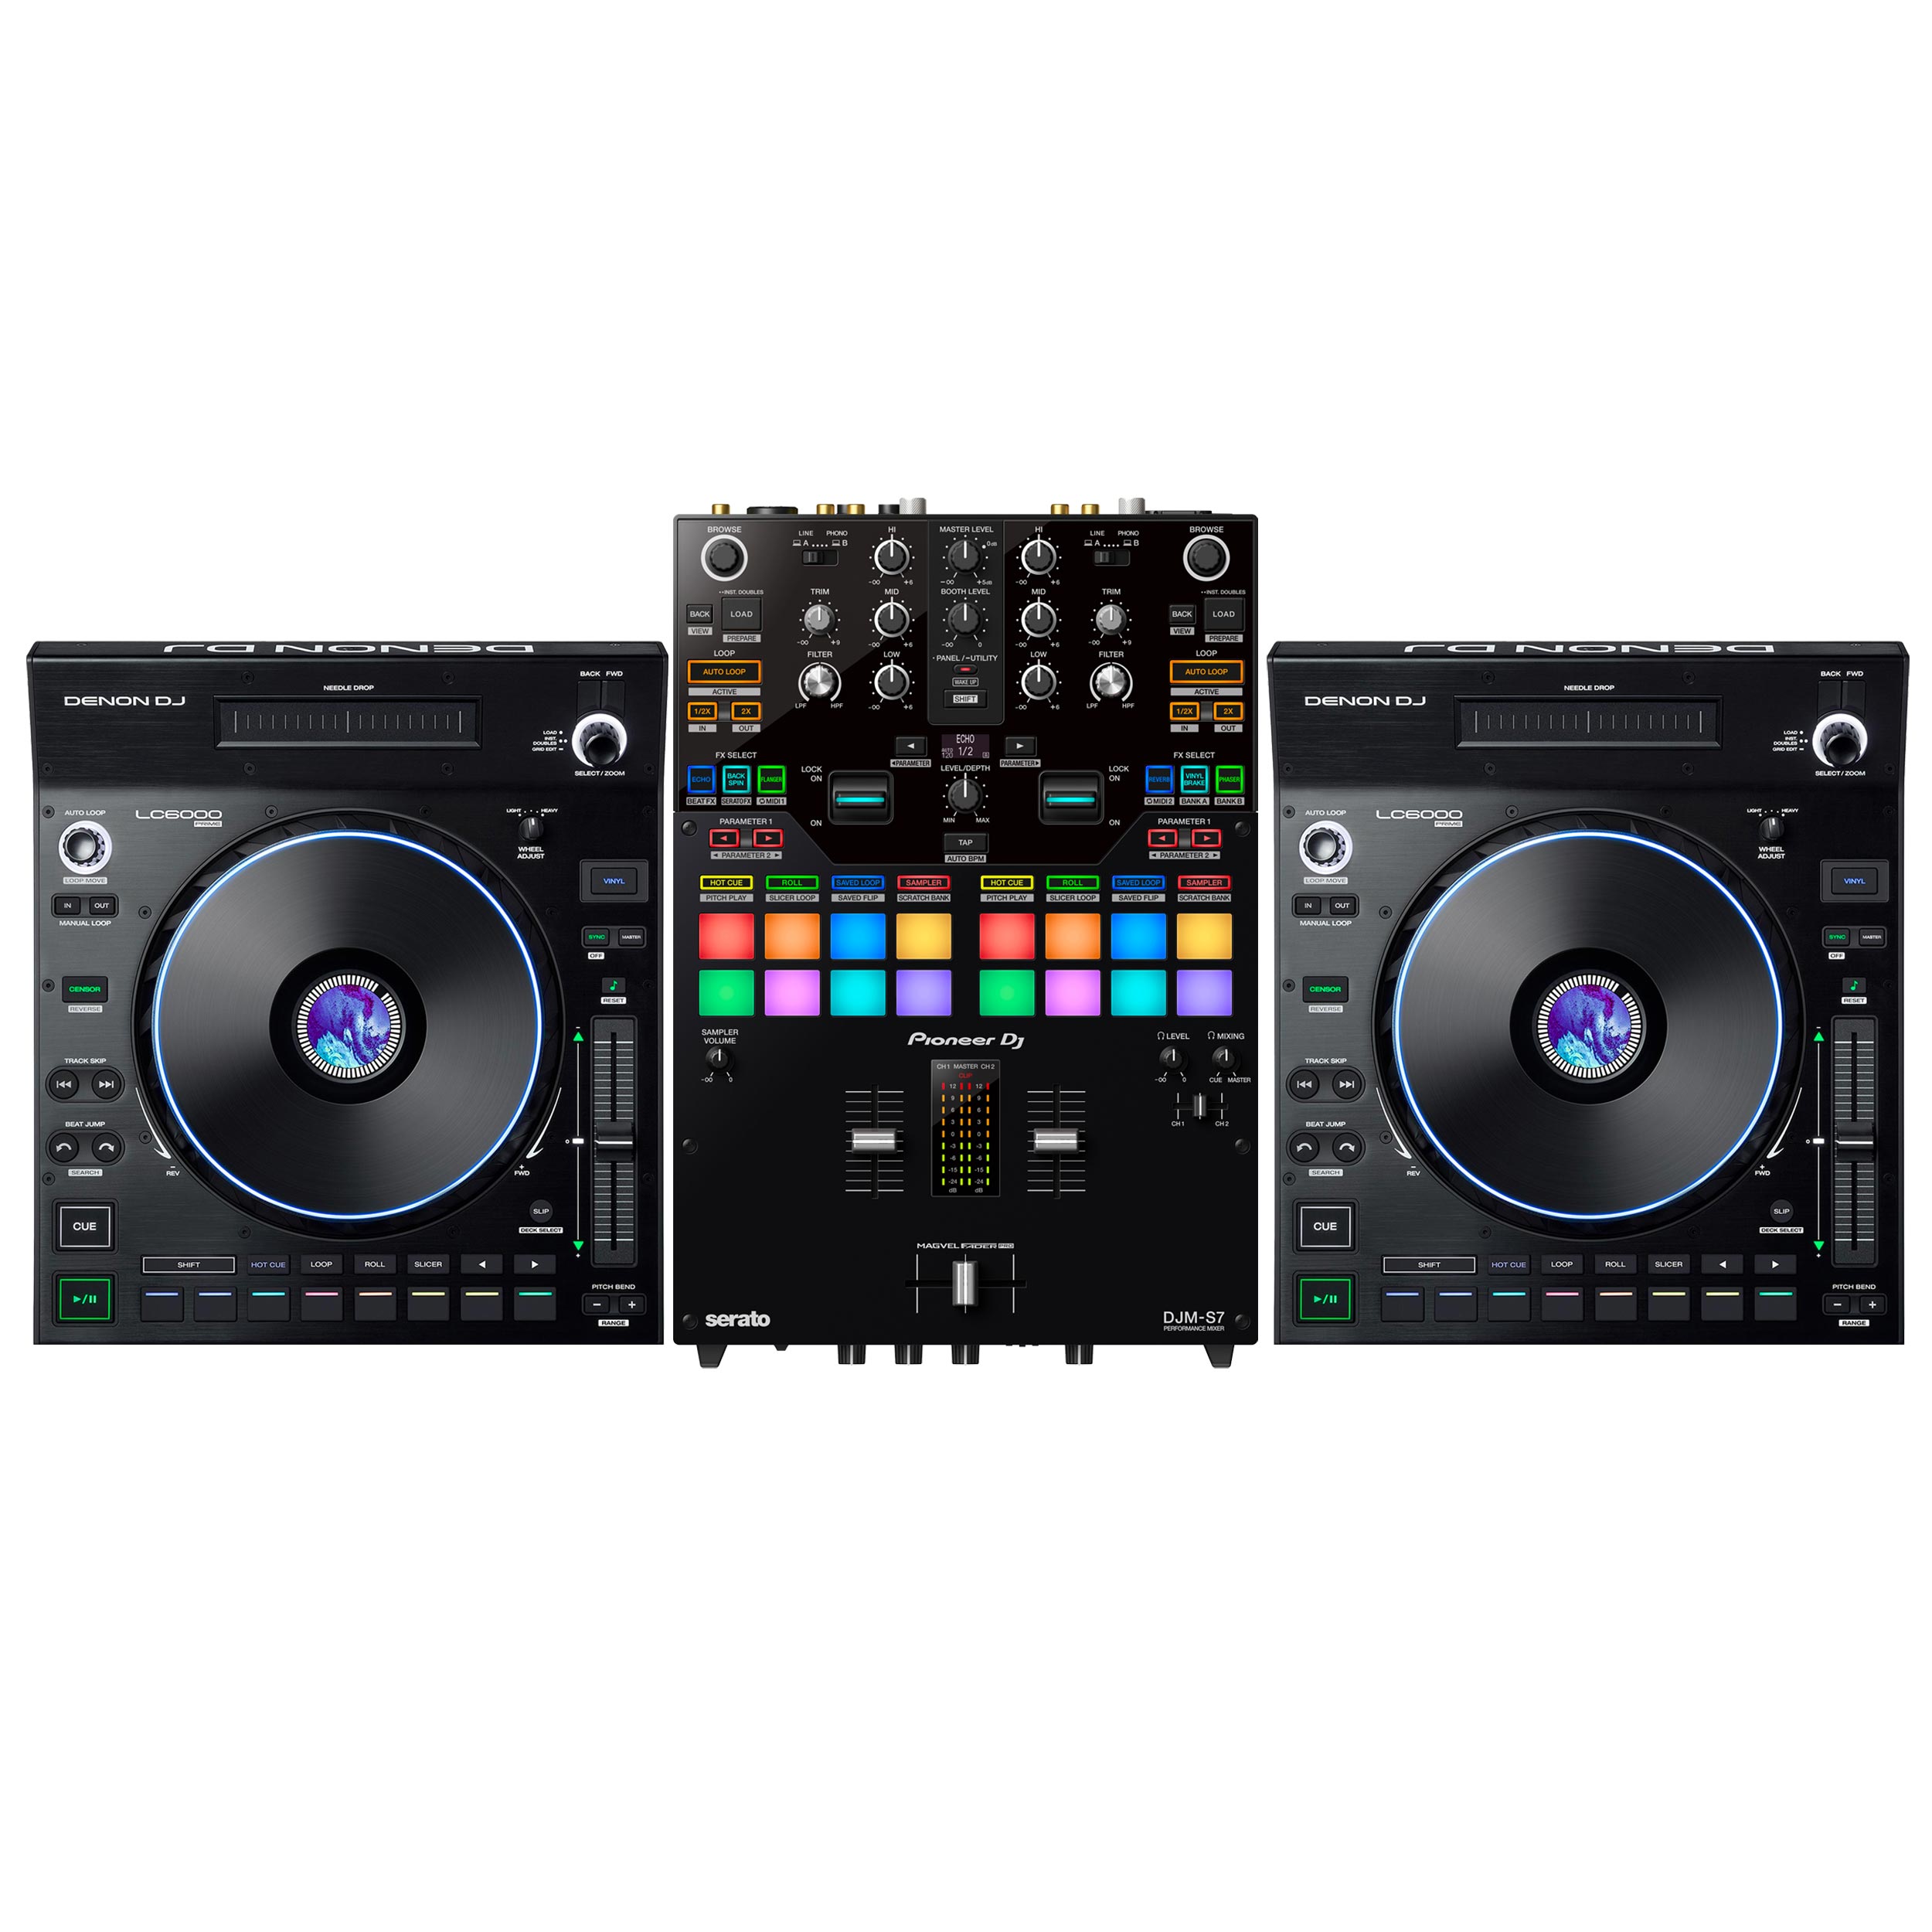 DJM-S7 : Table de Mixage DJ Pioneer DJ 